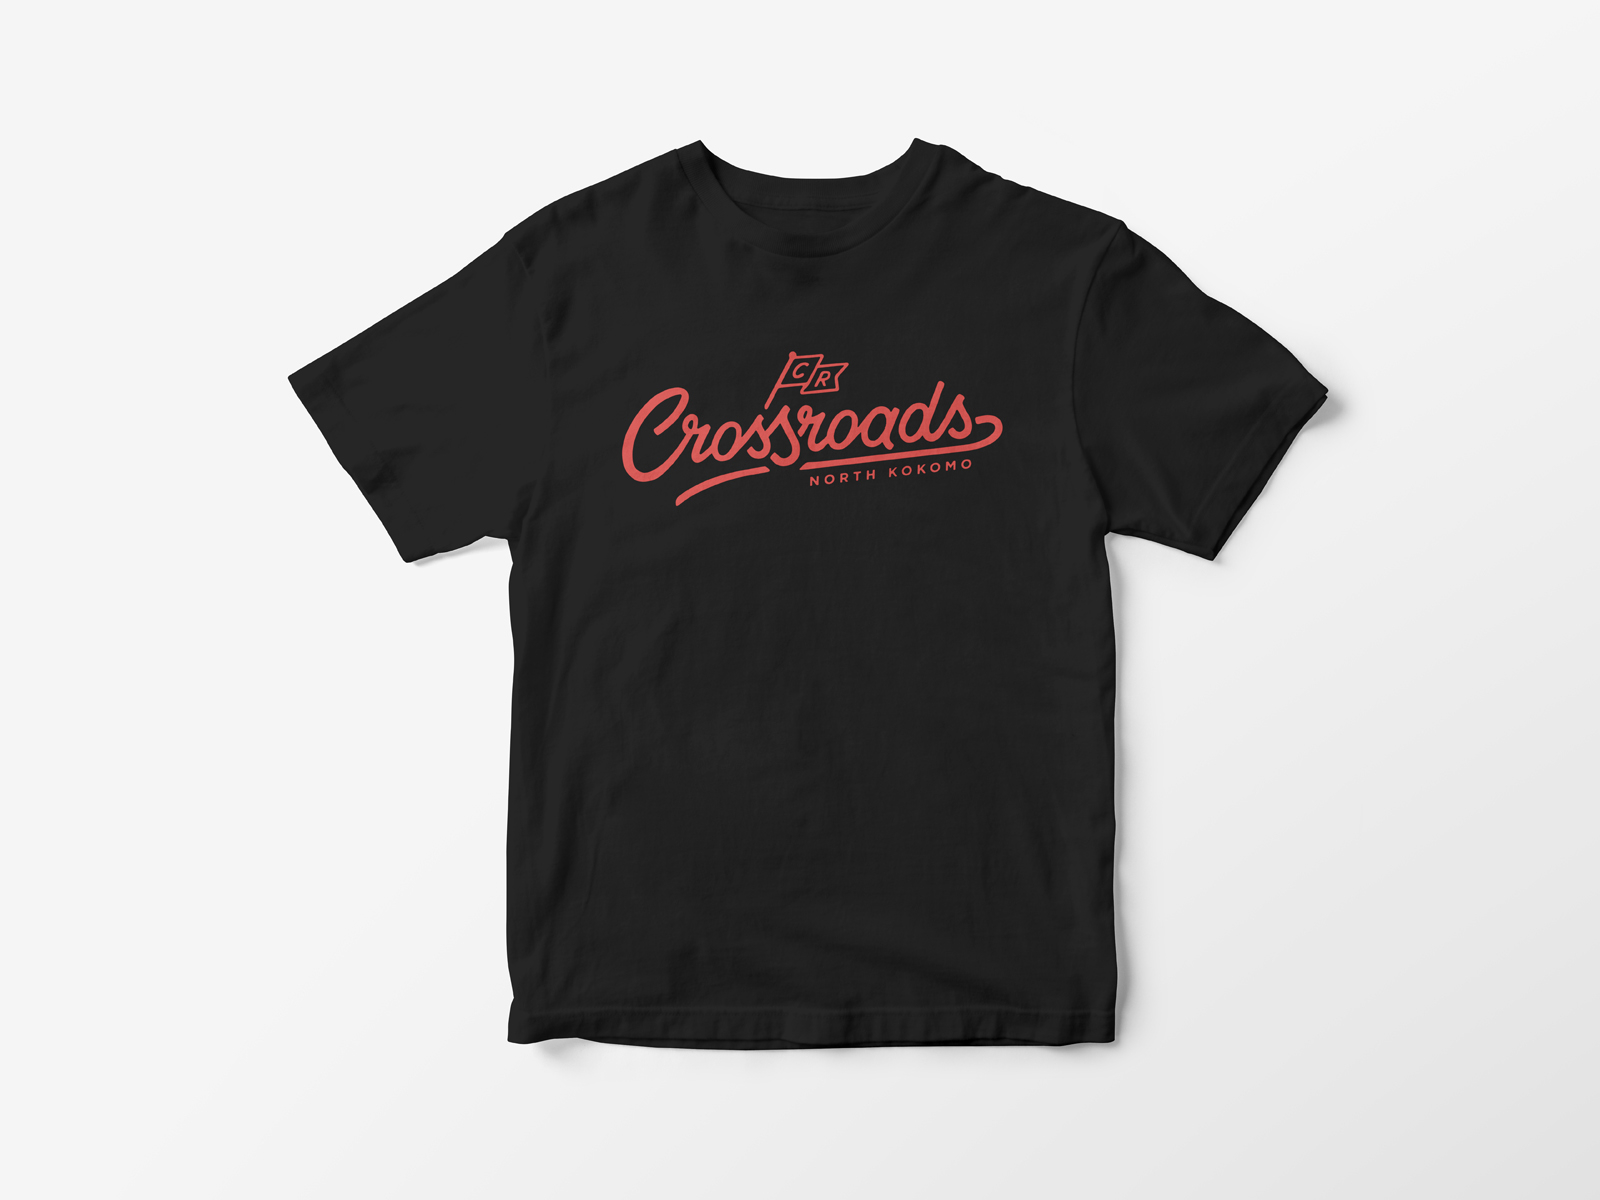 Crossroads t-shirt by Alex Arseni on Dribbble